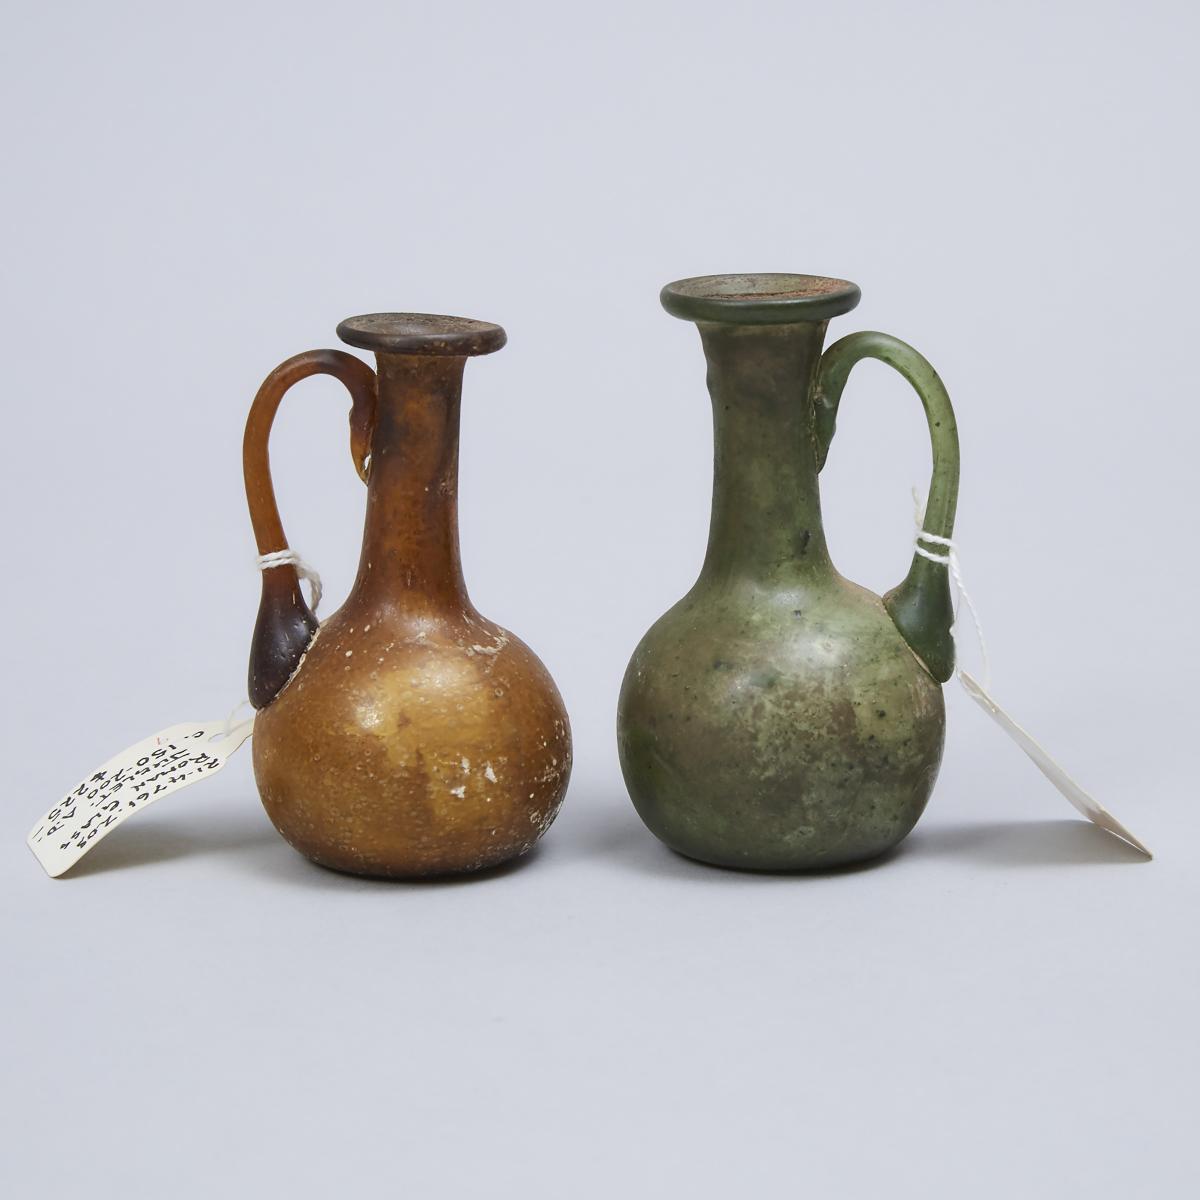 Two Roman Glass Juglets, 100-200 A.D., height 3.7 in — 9.5 cm